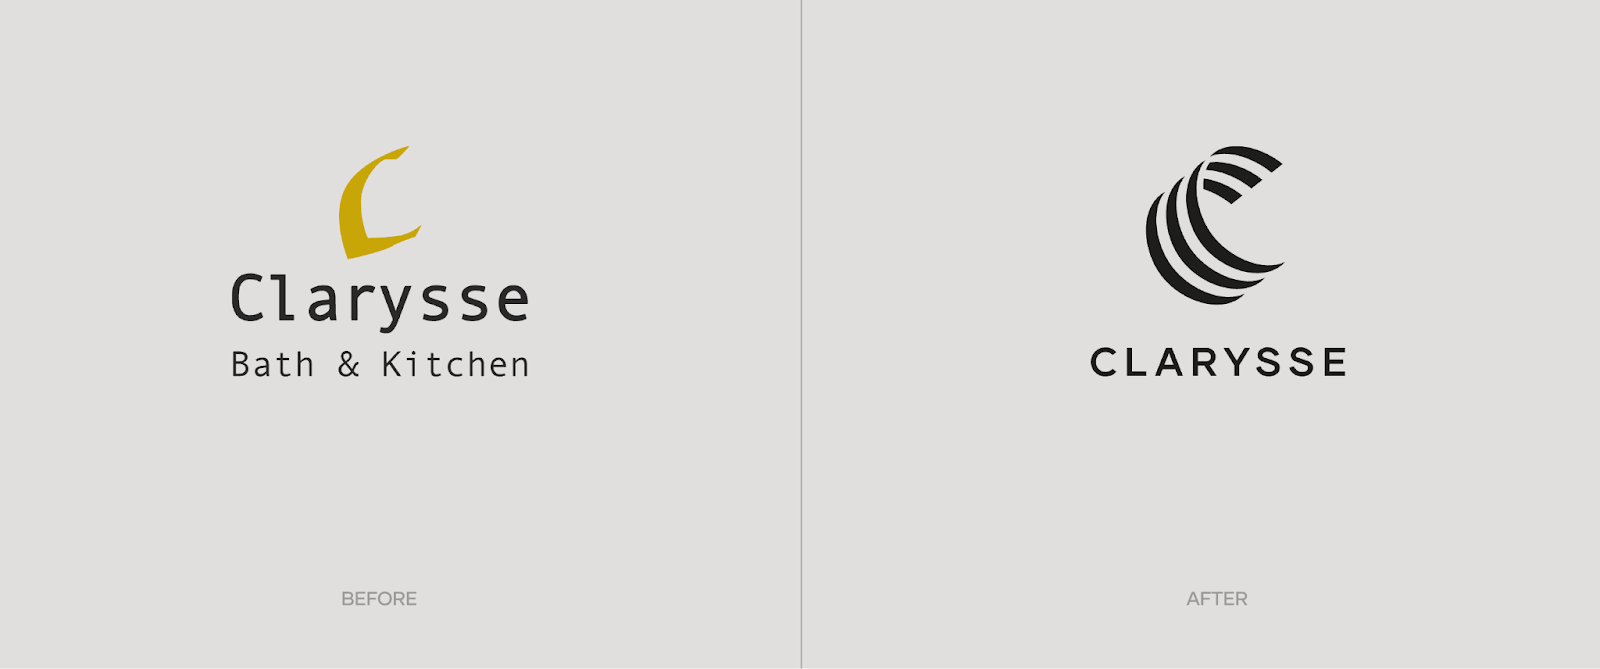 Artifact from Rebranding Clarysse: A Masterclass in Branding and Visual Identity for abduzeedo.com